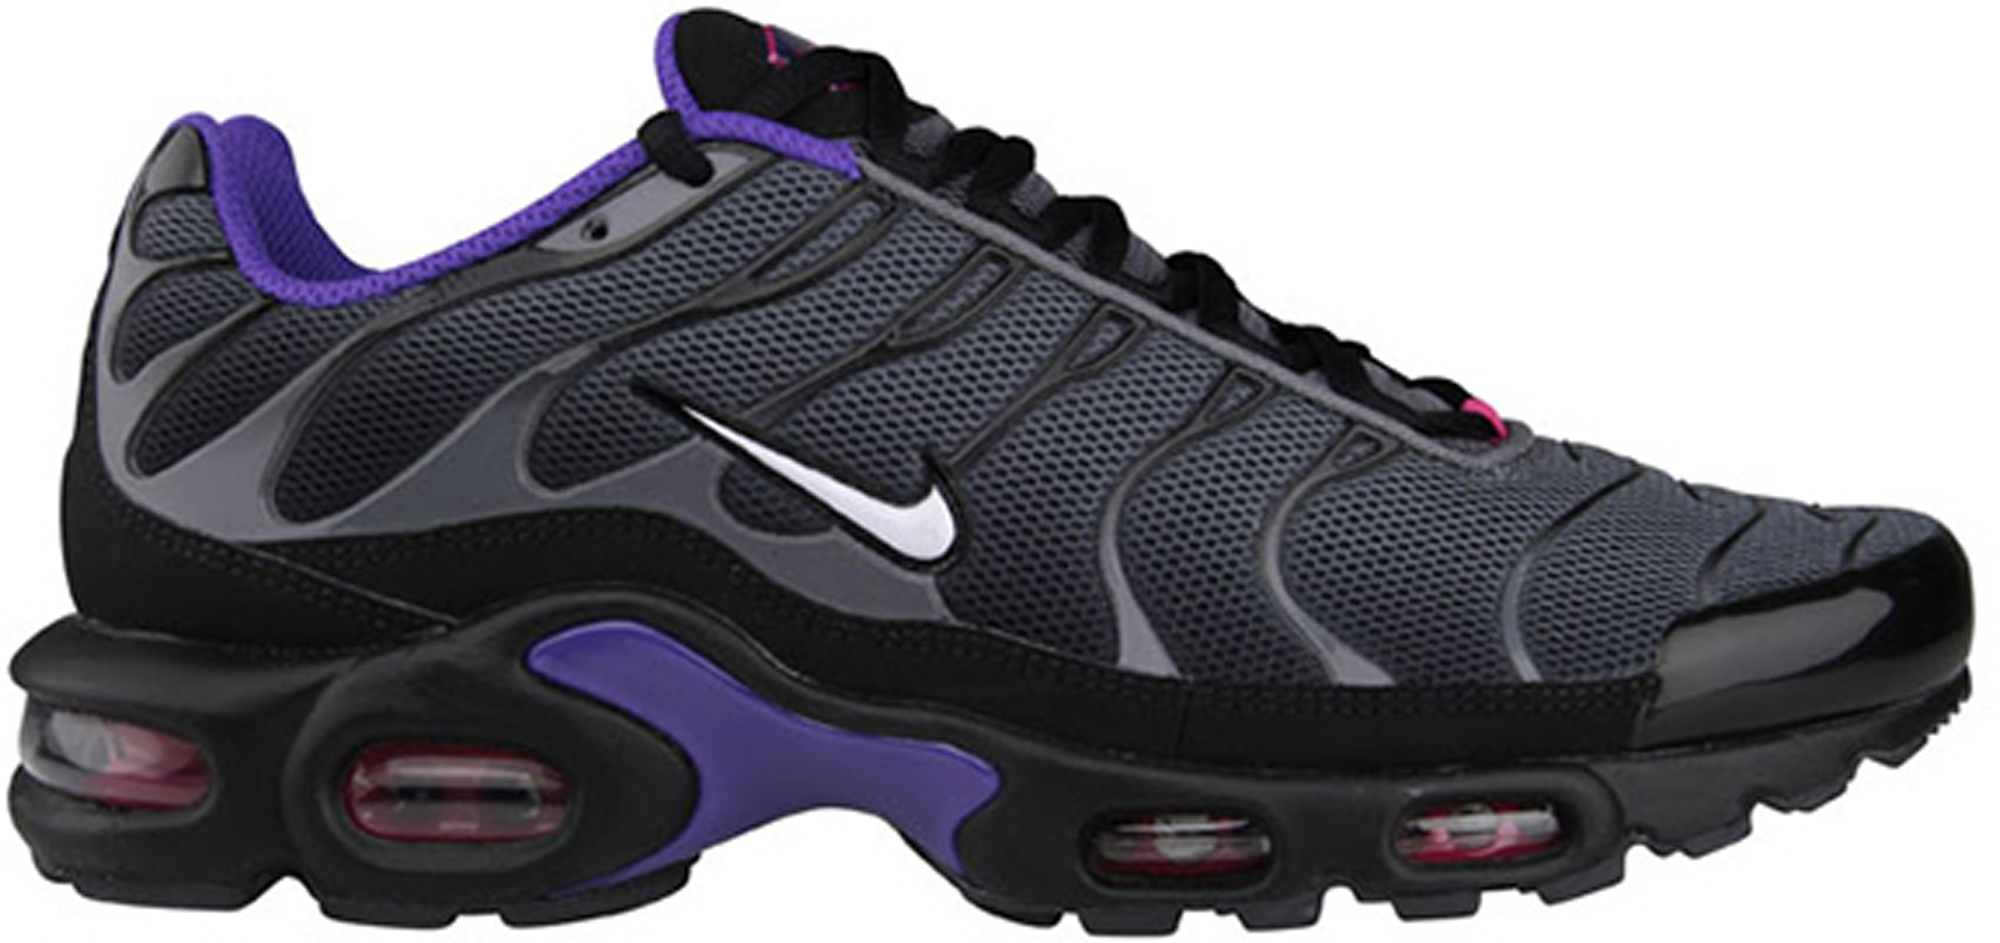 nike air max plus sneakers purple